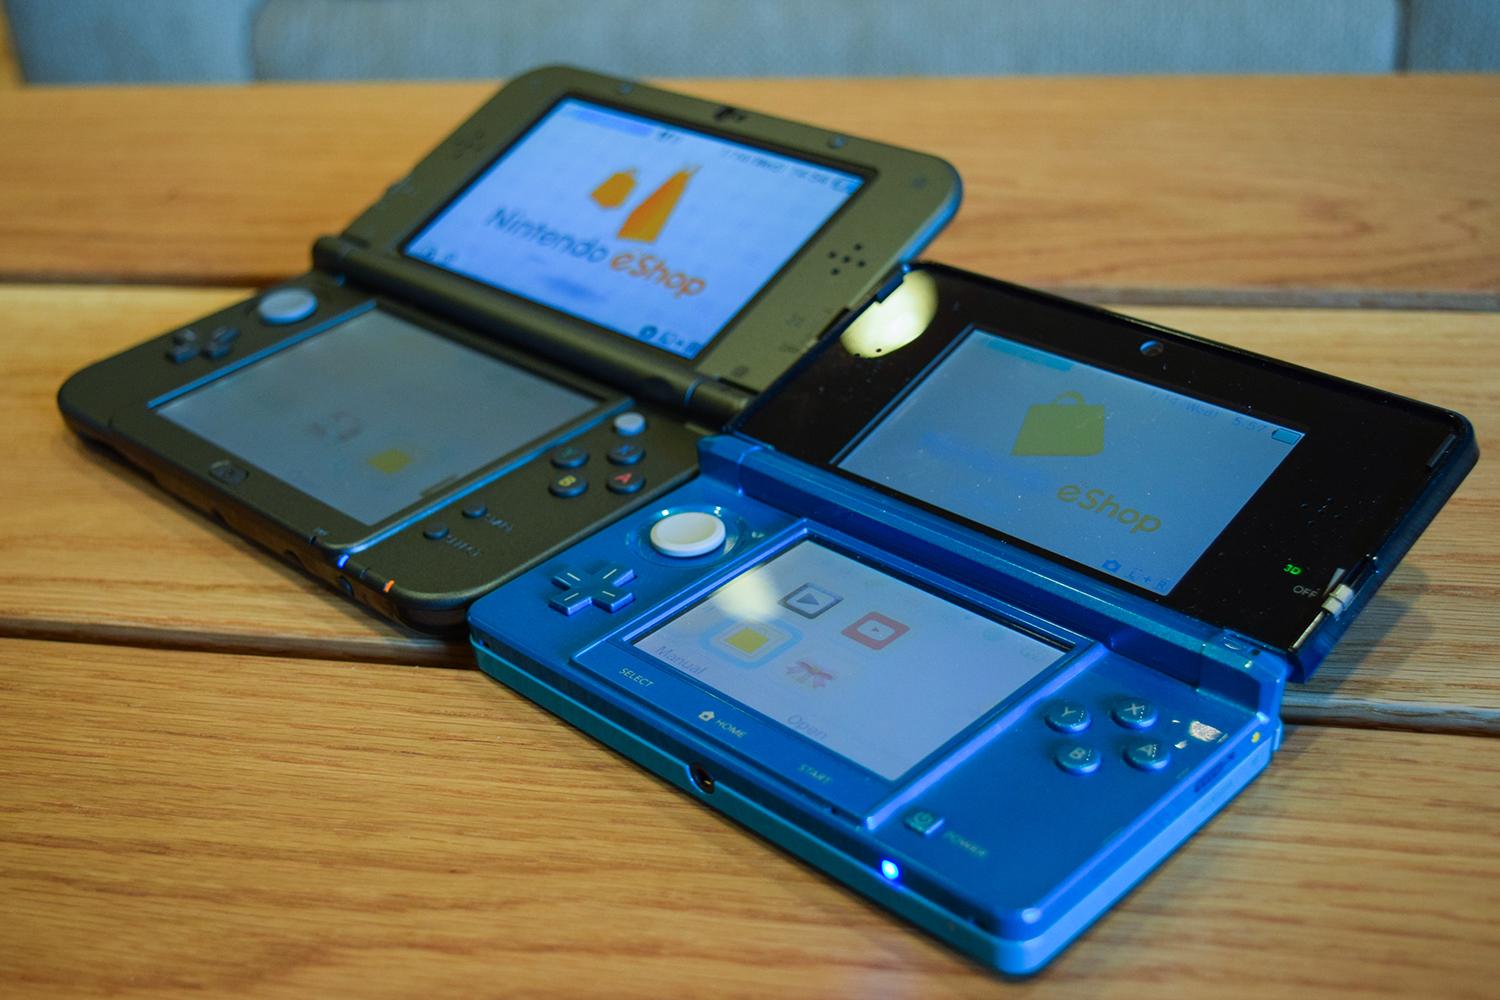 Nintendo DSi XL Repairs: Charging Port Replacement Service